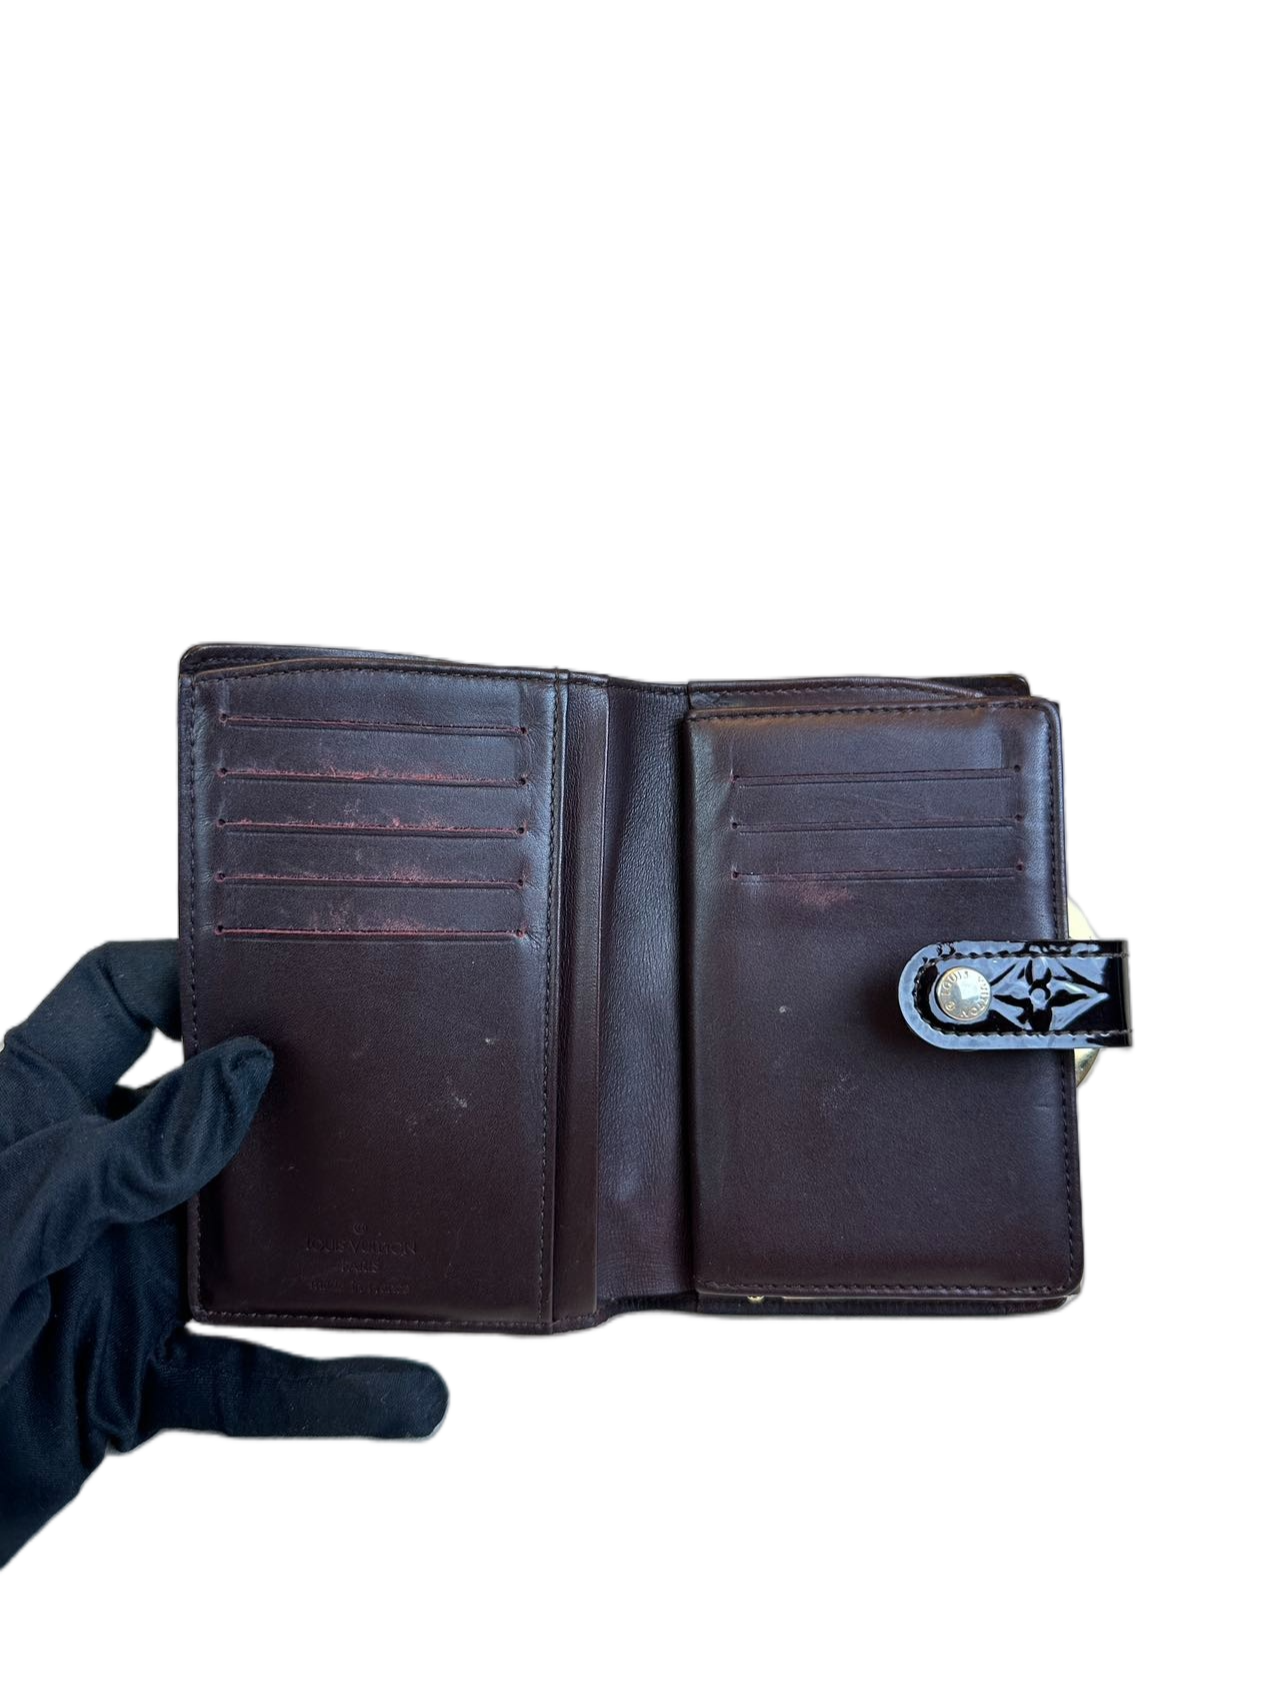 Preloved Louis Vuitton Vernis Monogram Convert Wallet